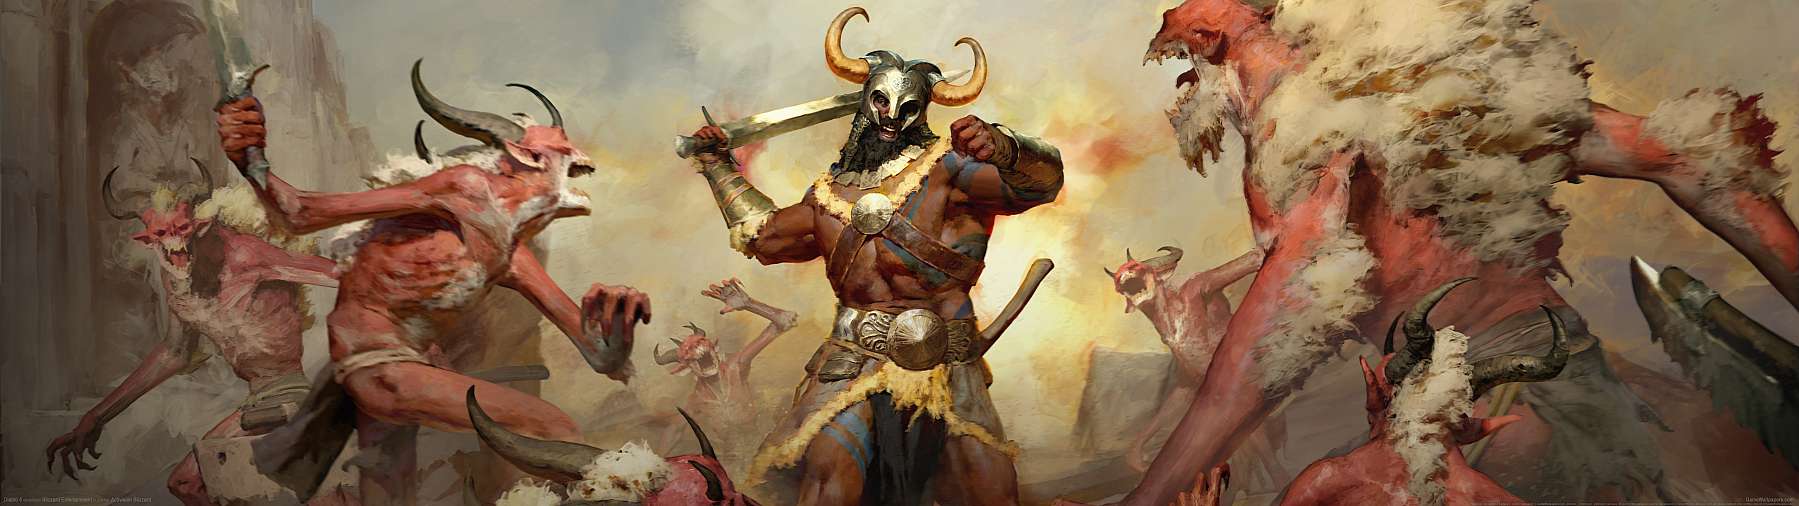 Diablo 4 superwide wallpaper or background 22